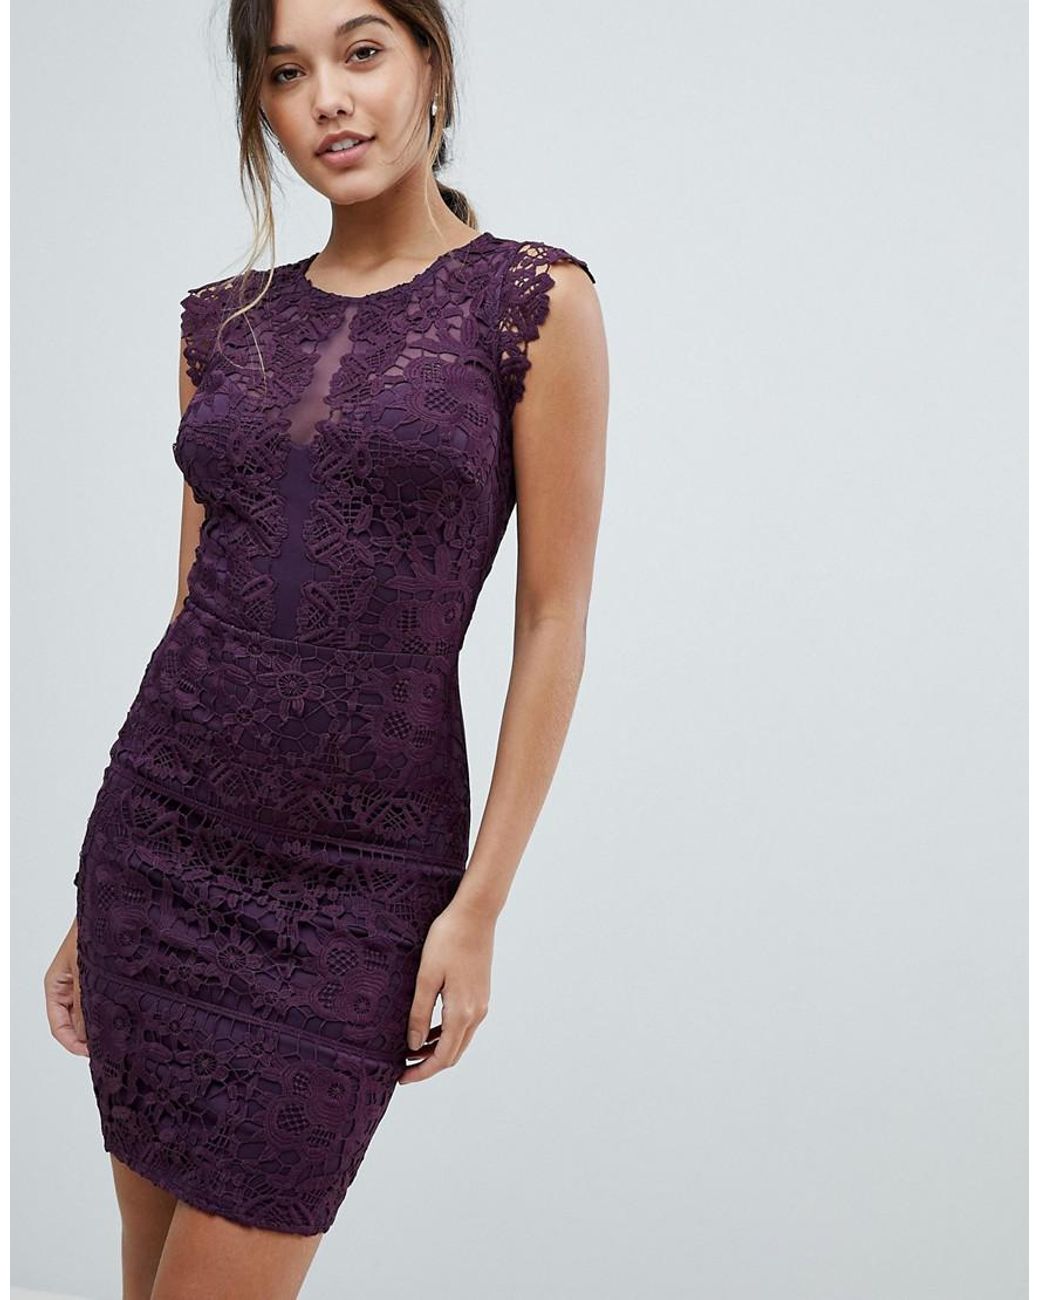 https://cdna.lystit.com/1040/1300/n/photos/asos/08eba2ed/lipsy-purple-Lace-Bodycon-Dress-With-Scallop-Lace-Sleeve.jpeg